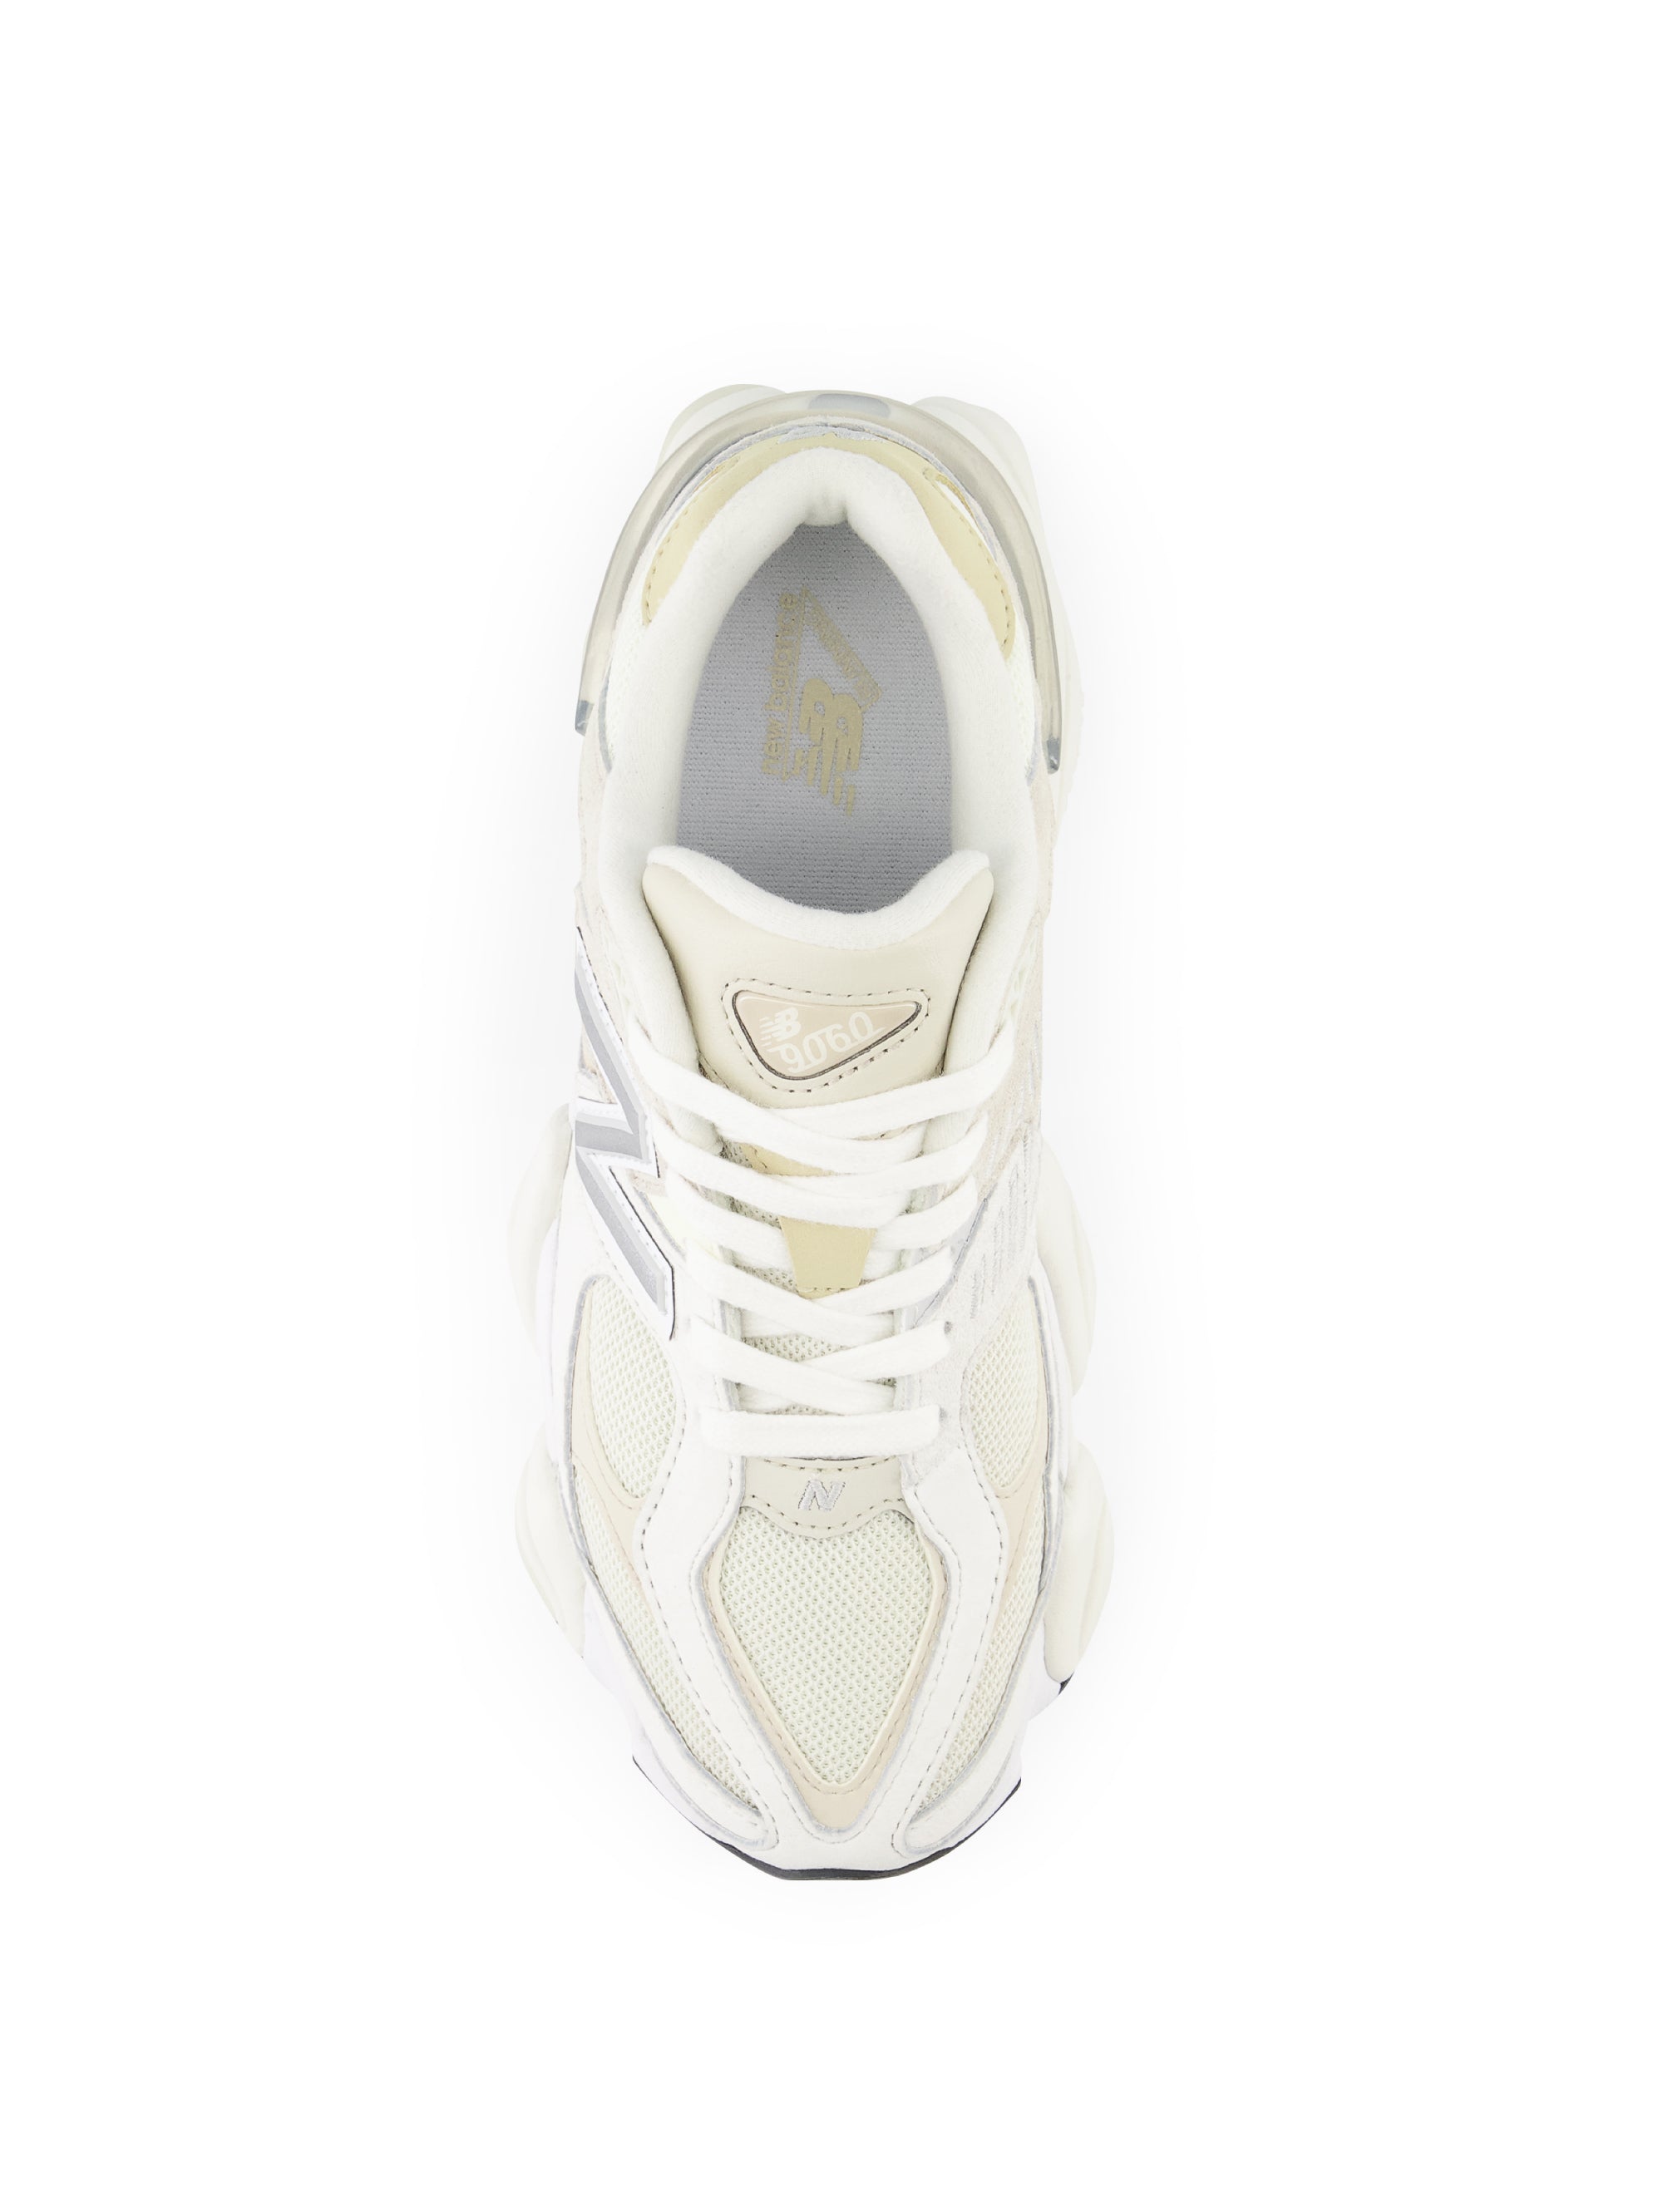 Futuristische 9060 Damen-Sneaker in Weiß/Creme